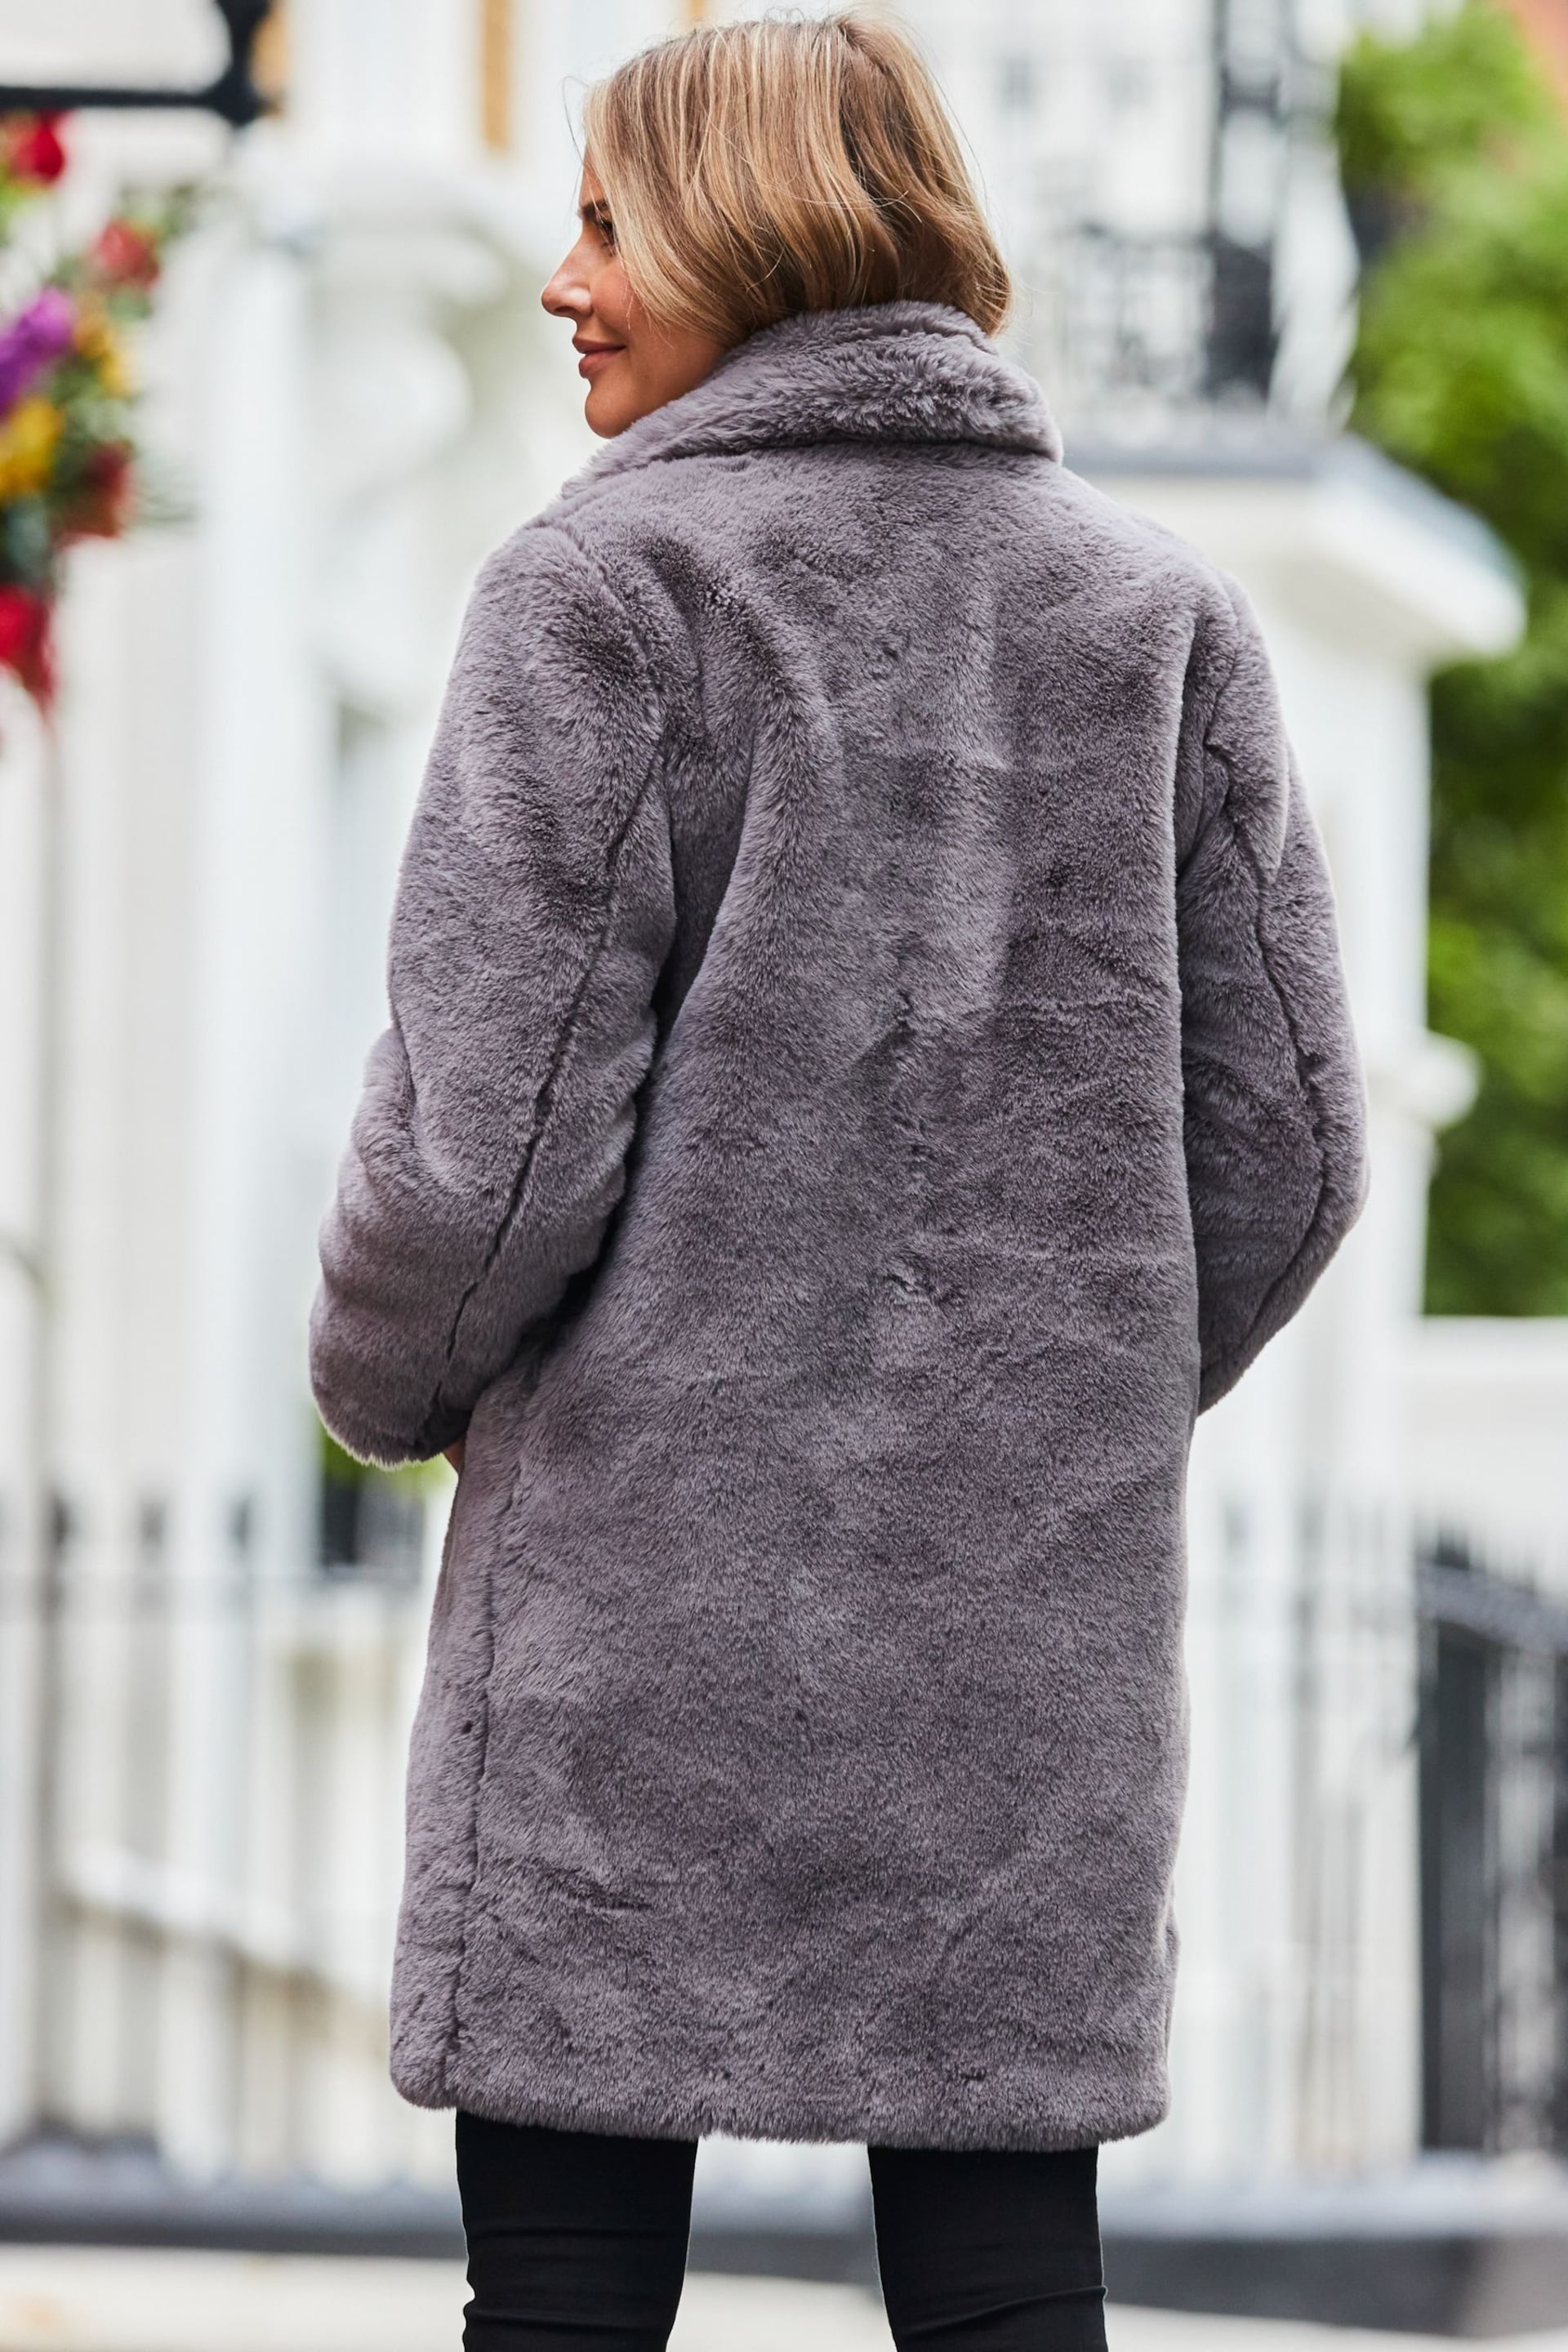 Sosandar Grey Luxe Faux Fur Coat - Image 2 of 5